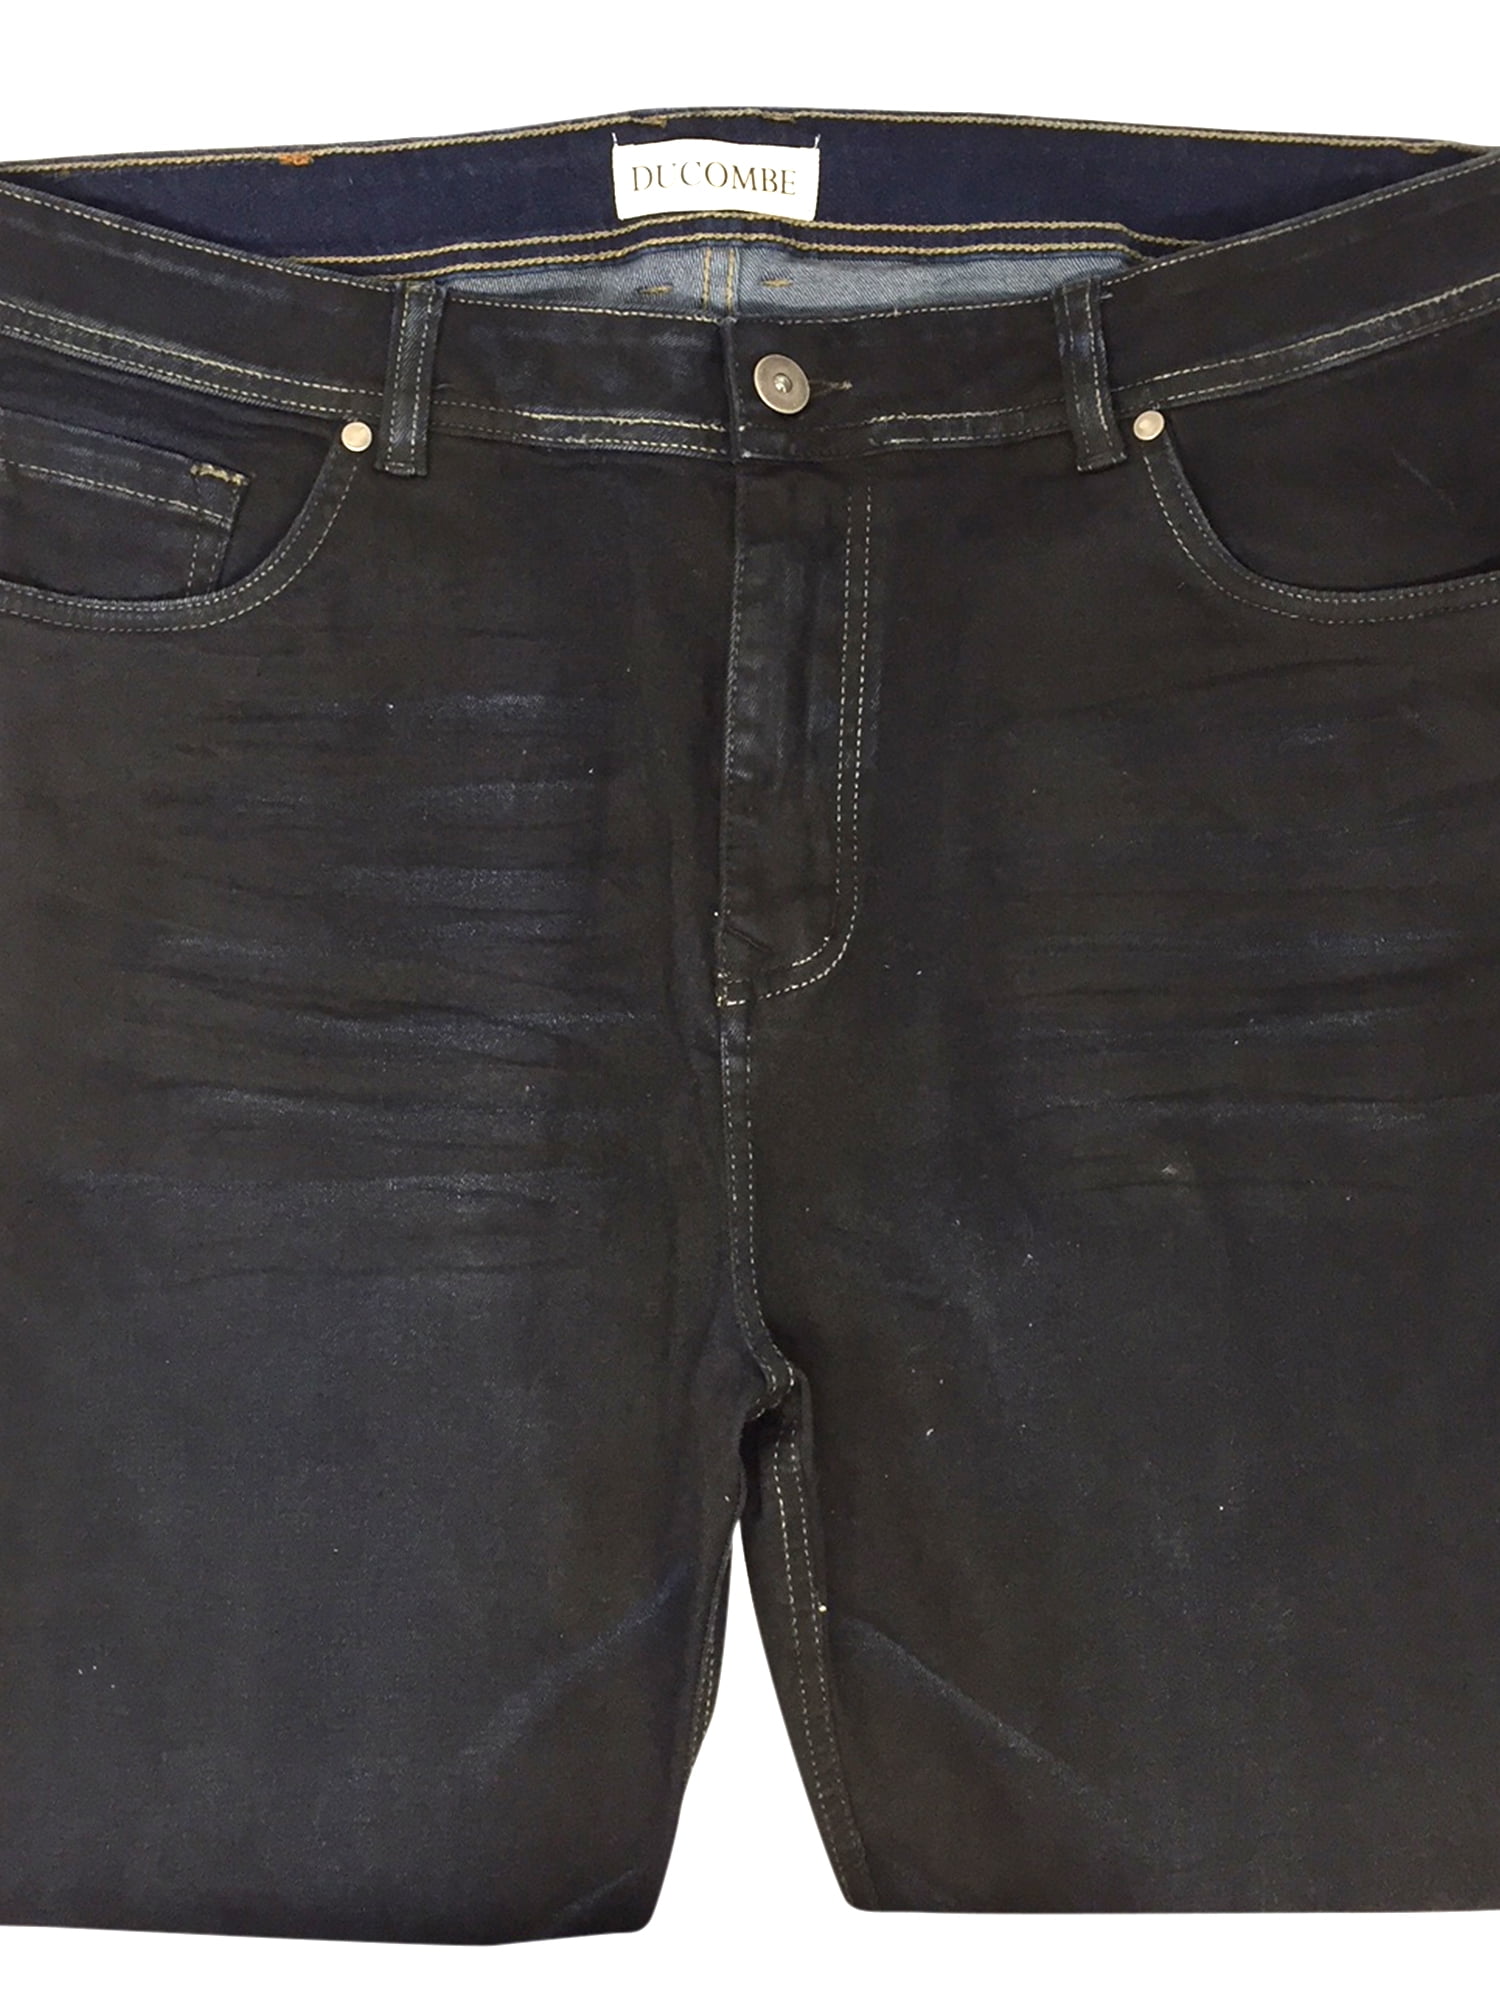 mens jeans 29 inch leg